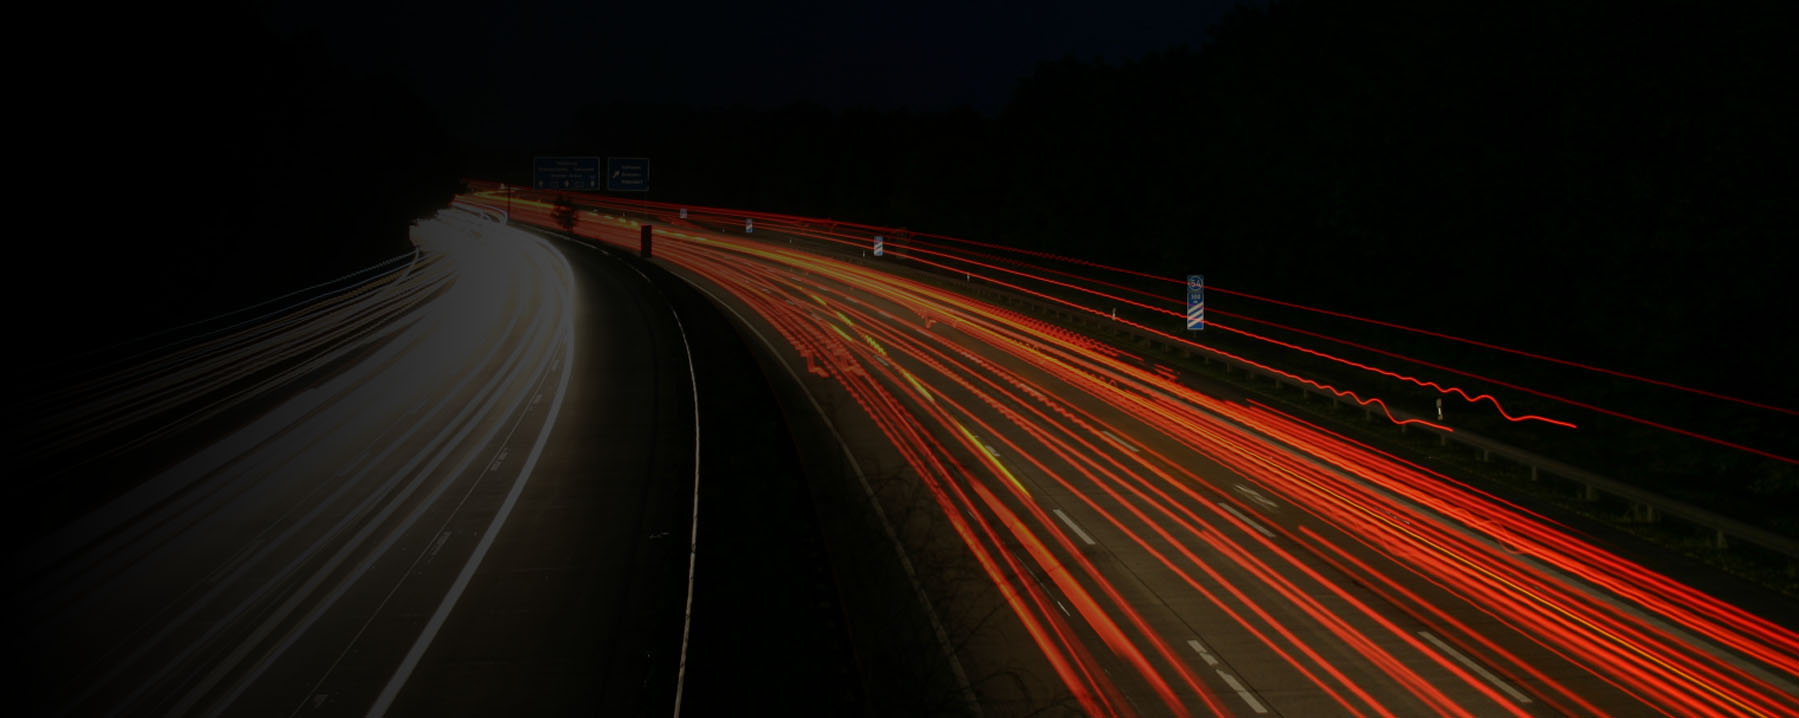 US Freeway at night showing Radar and Lidar sensors